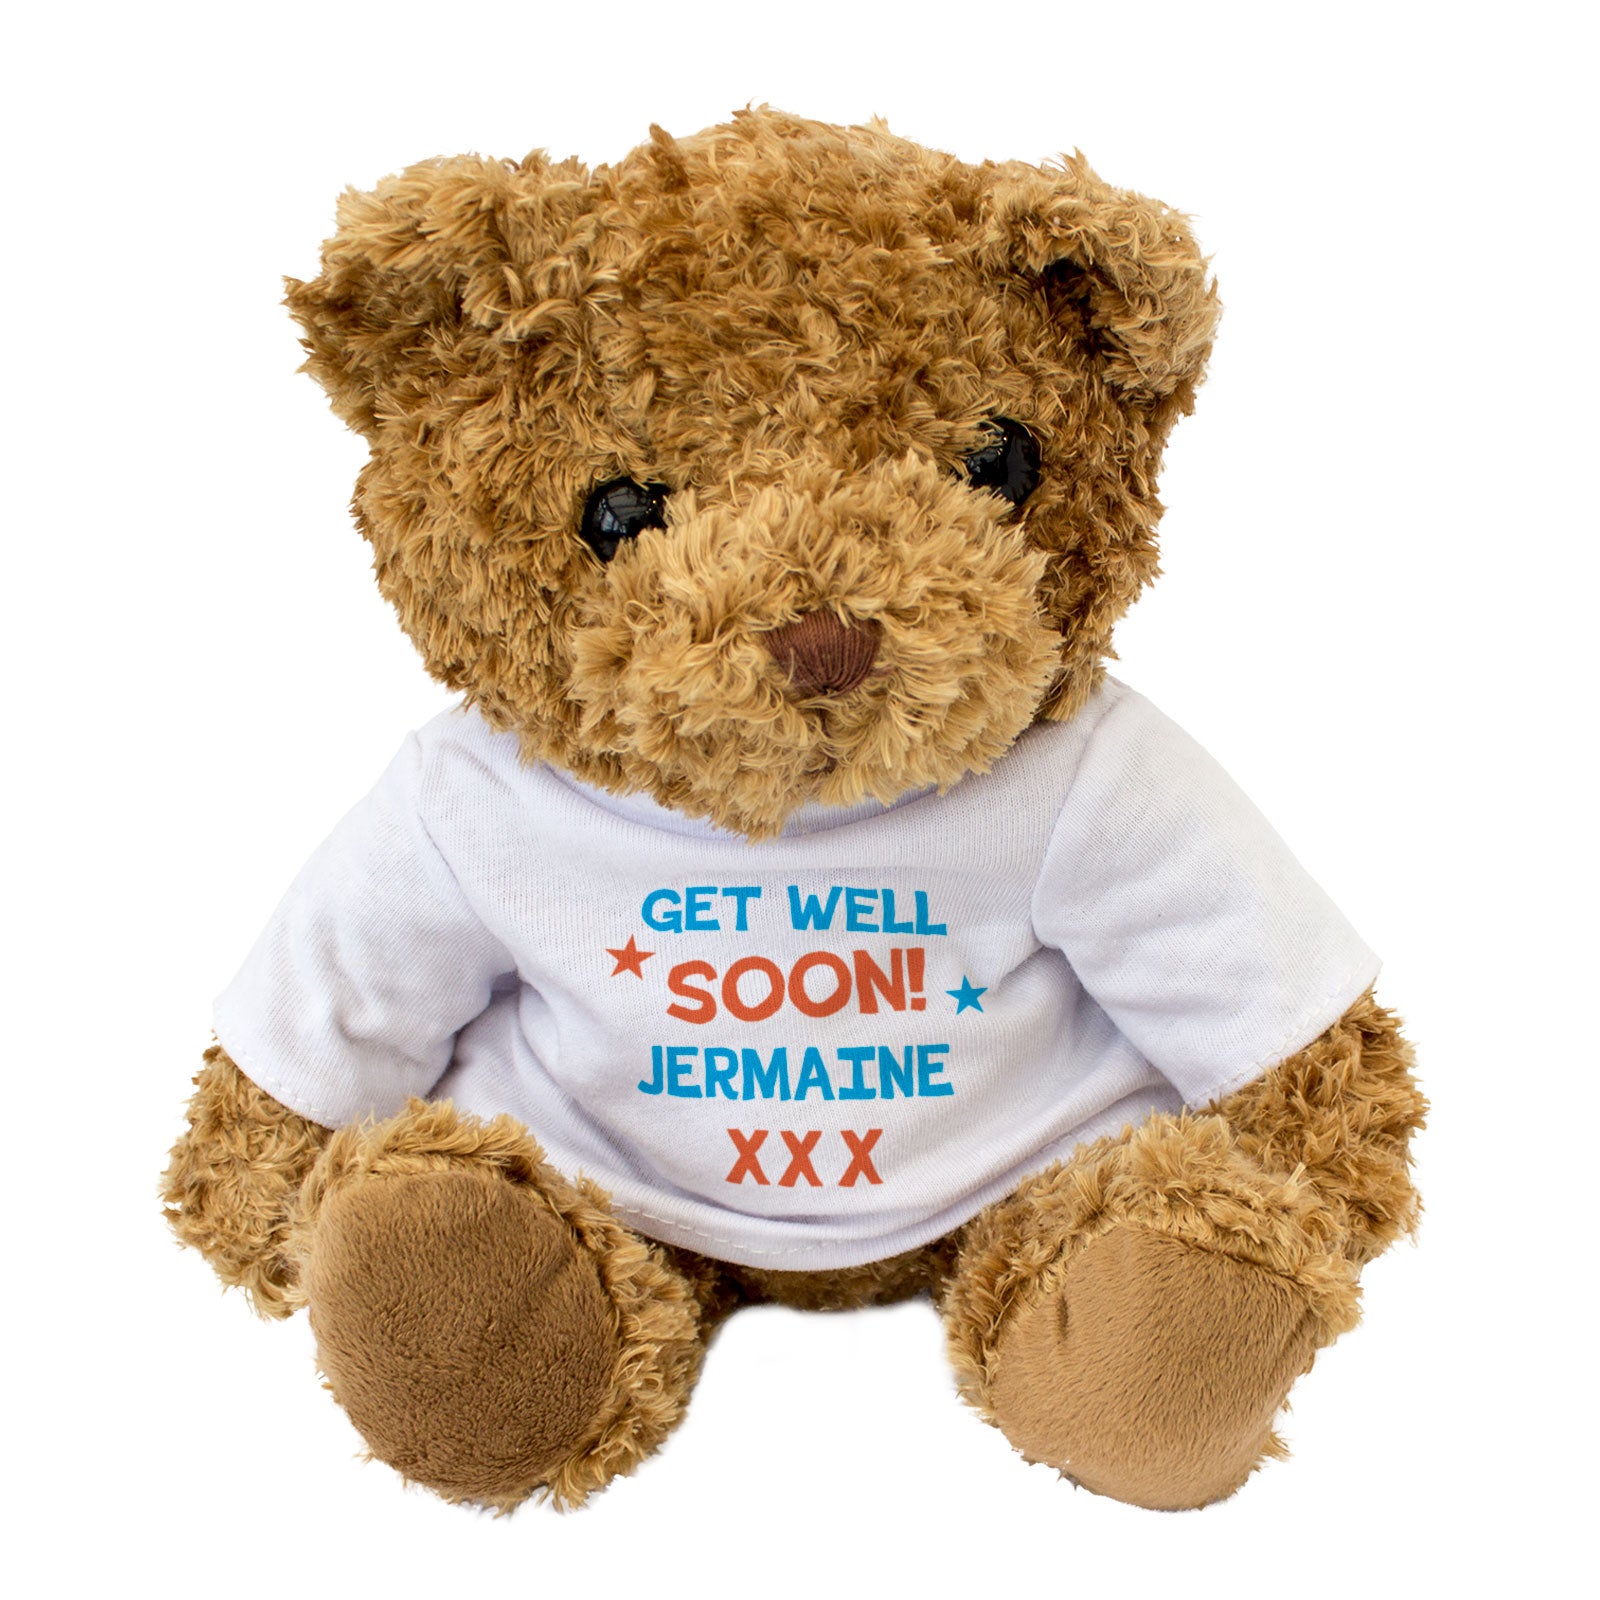 Get Well Soon Jermaine - Teddy Bear